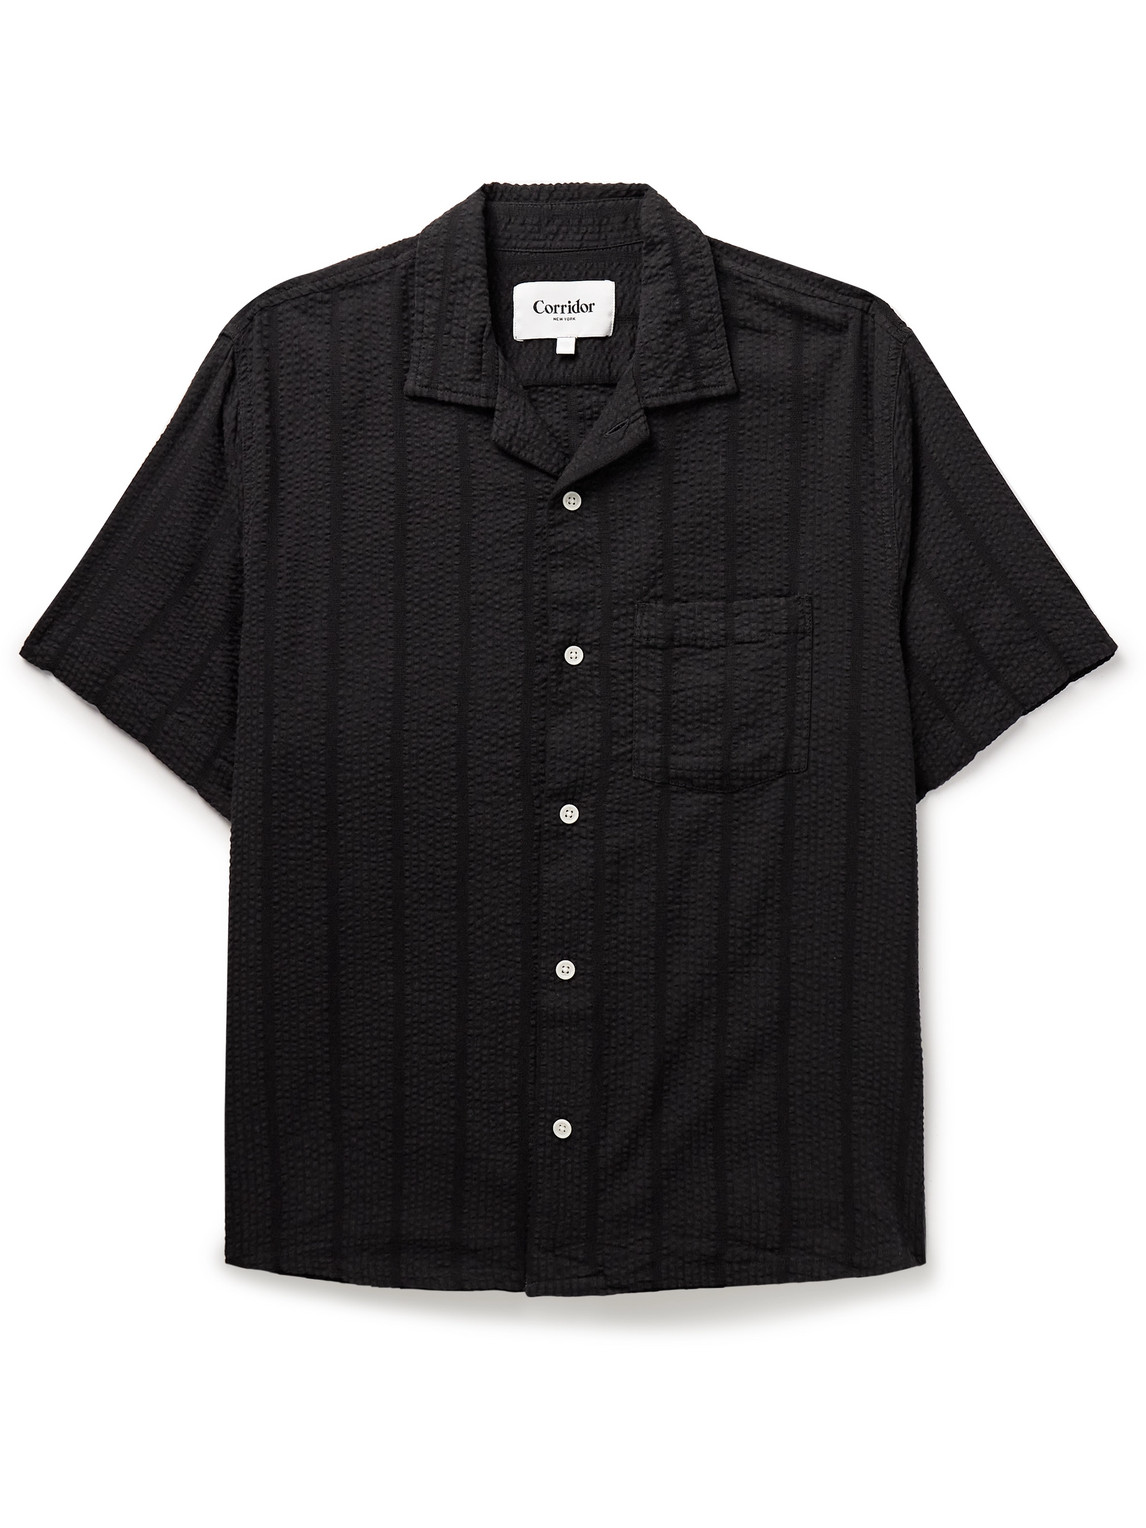 Corridor - Camp-Collar Striped Cotton-Seersucker Shirt - Men - Black - S von Corridor